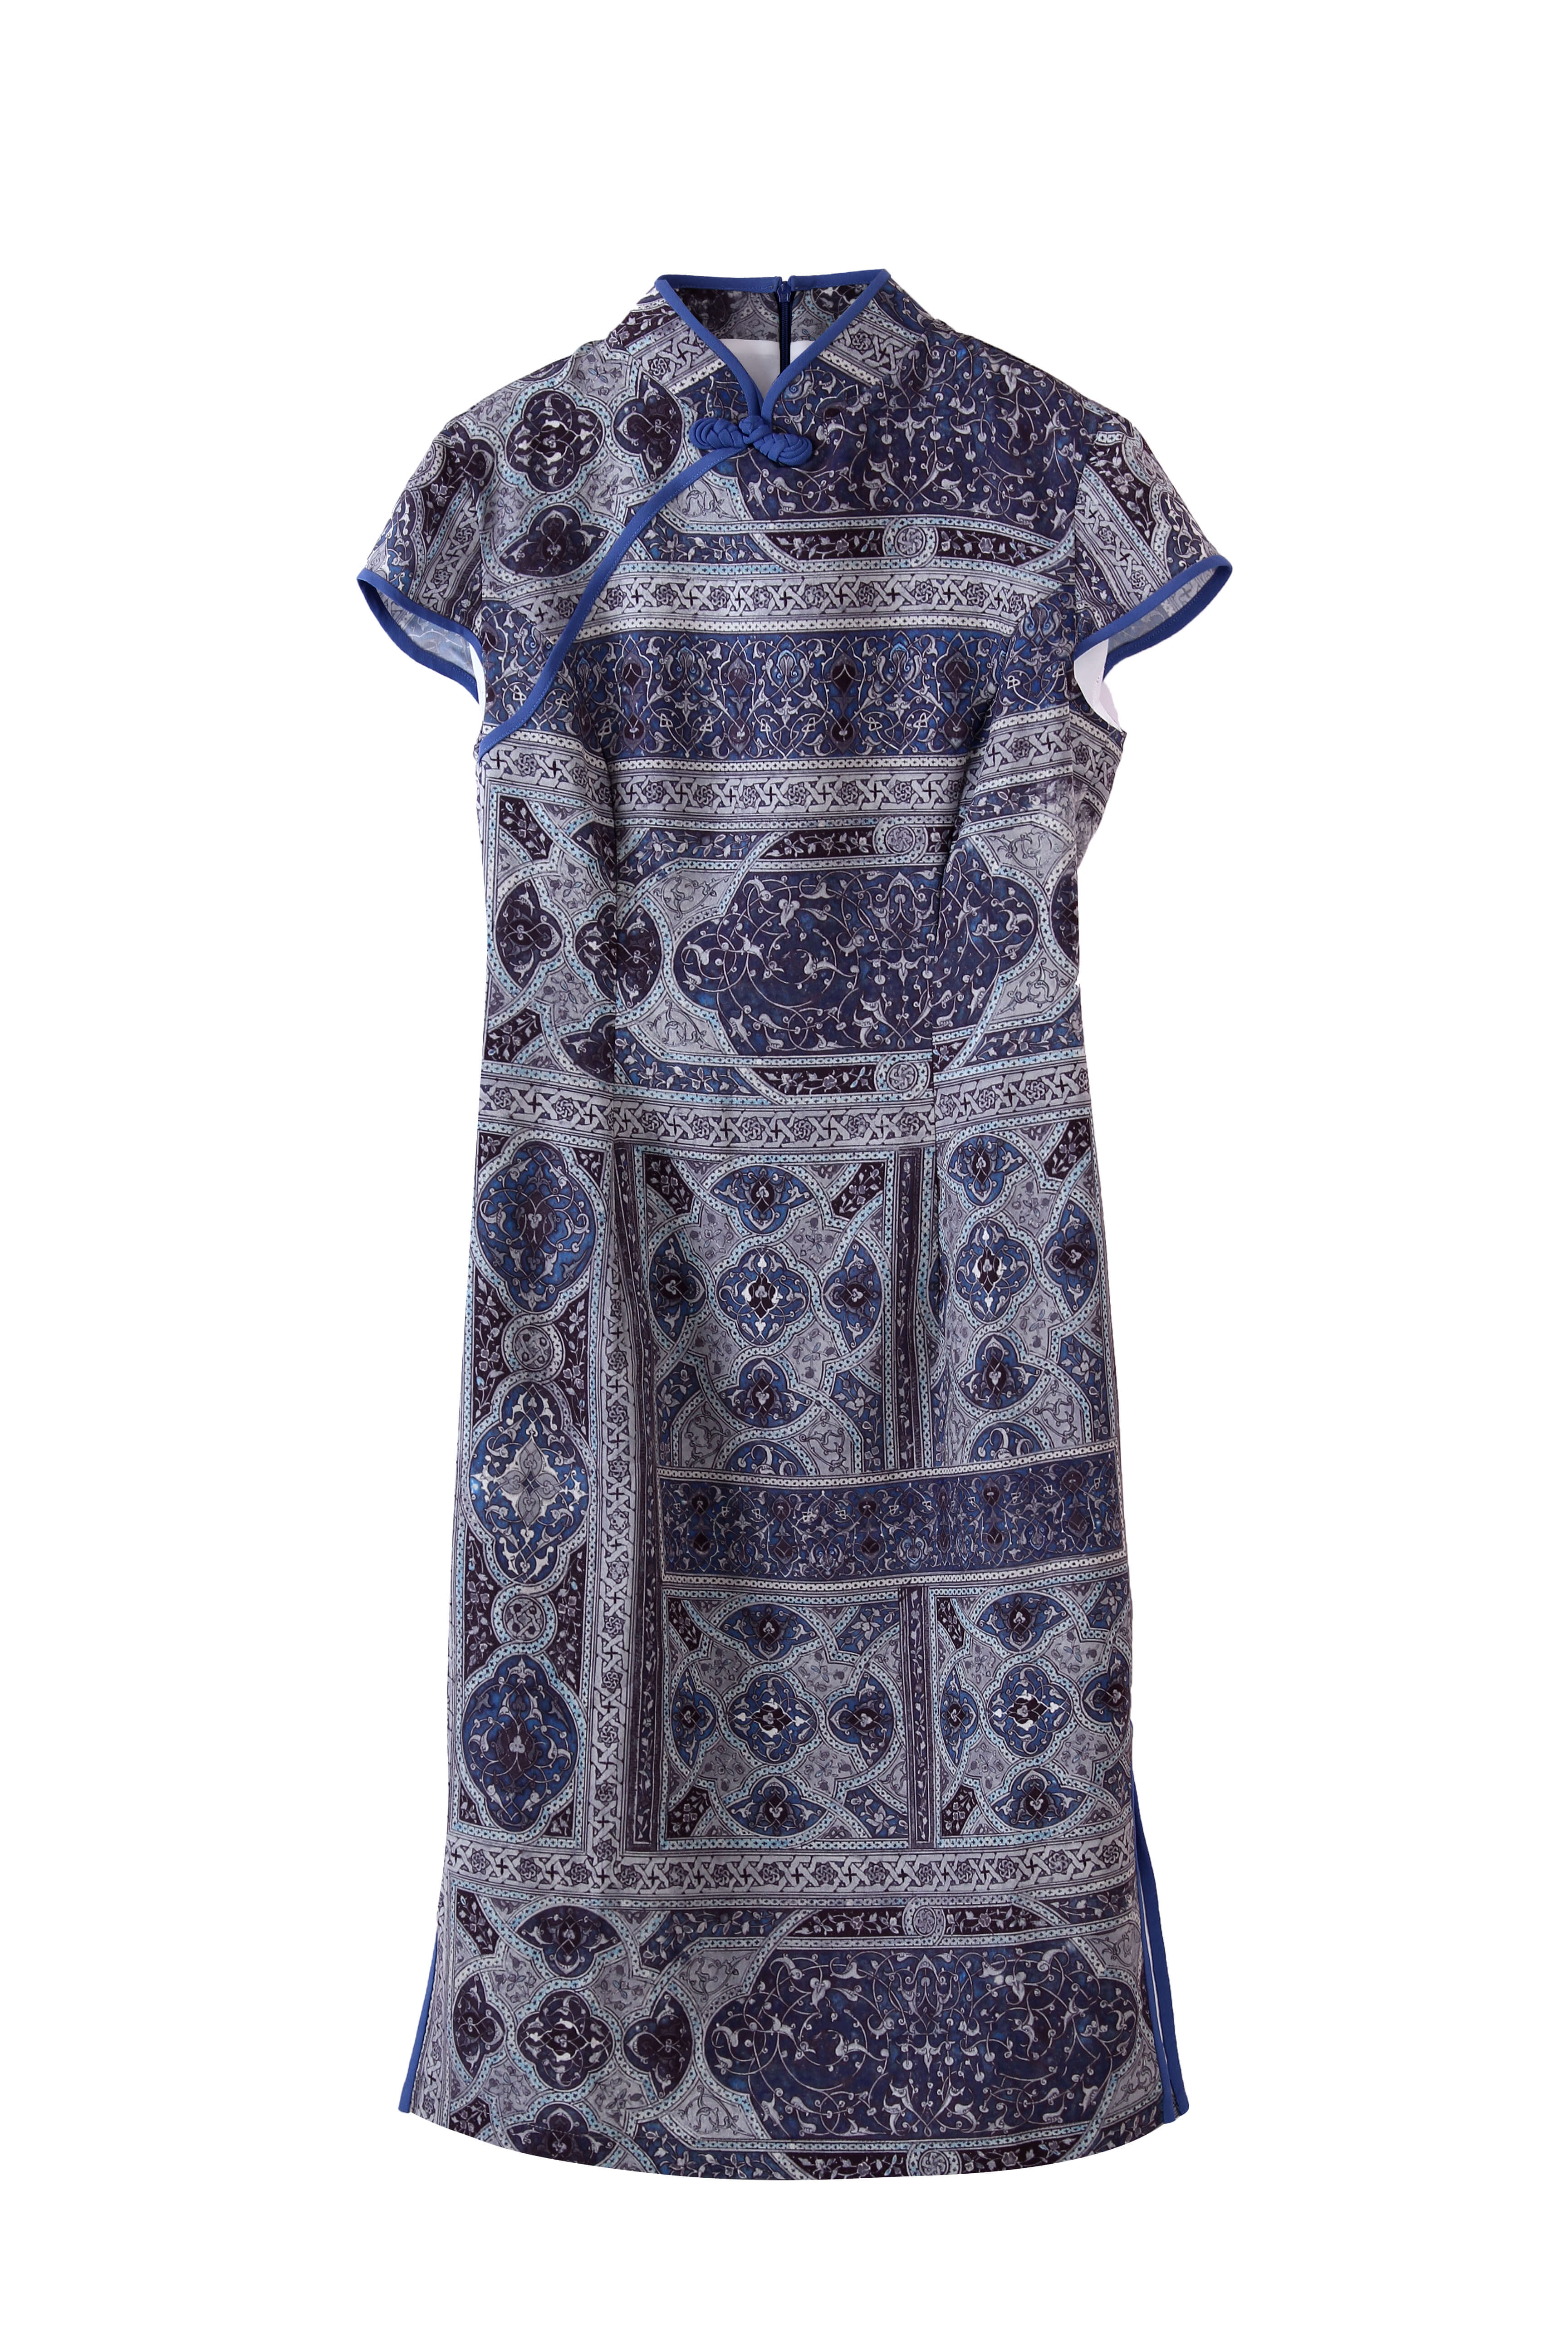 AKM X JUMA Shahnameh 旗袍 - 12个回收水瓶 - 蓝色｜ Qipao Dress - 12 Recycled Water Bottles - Blue